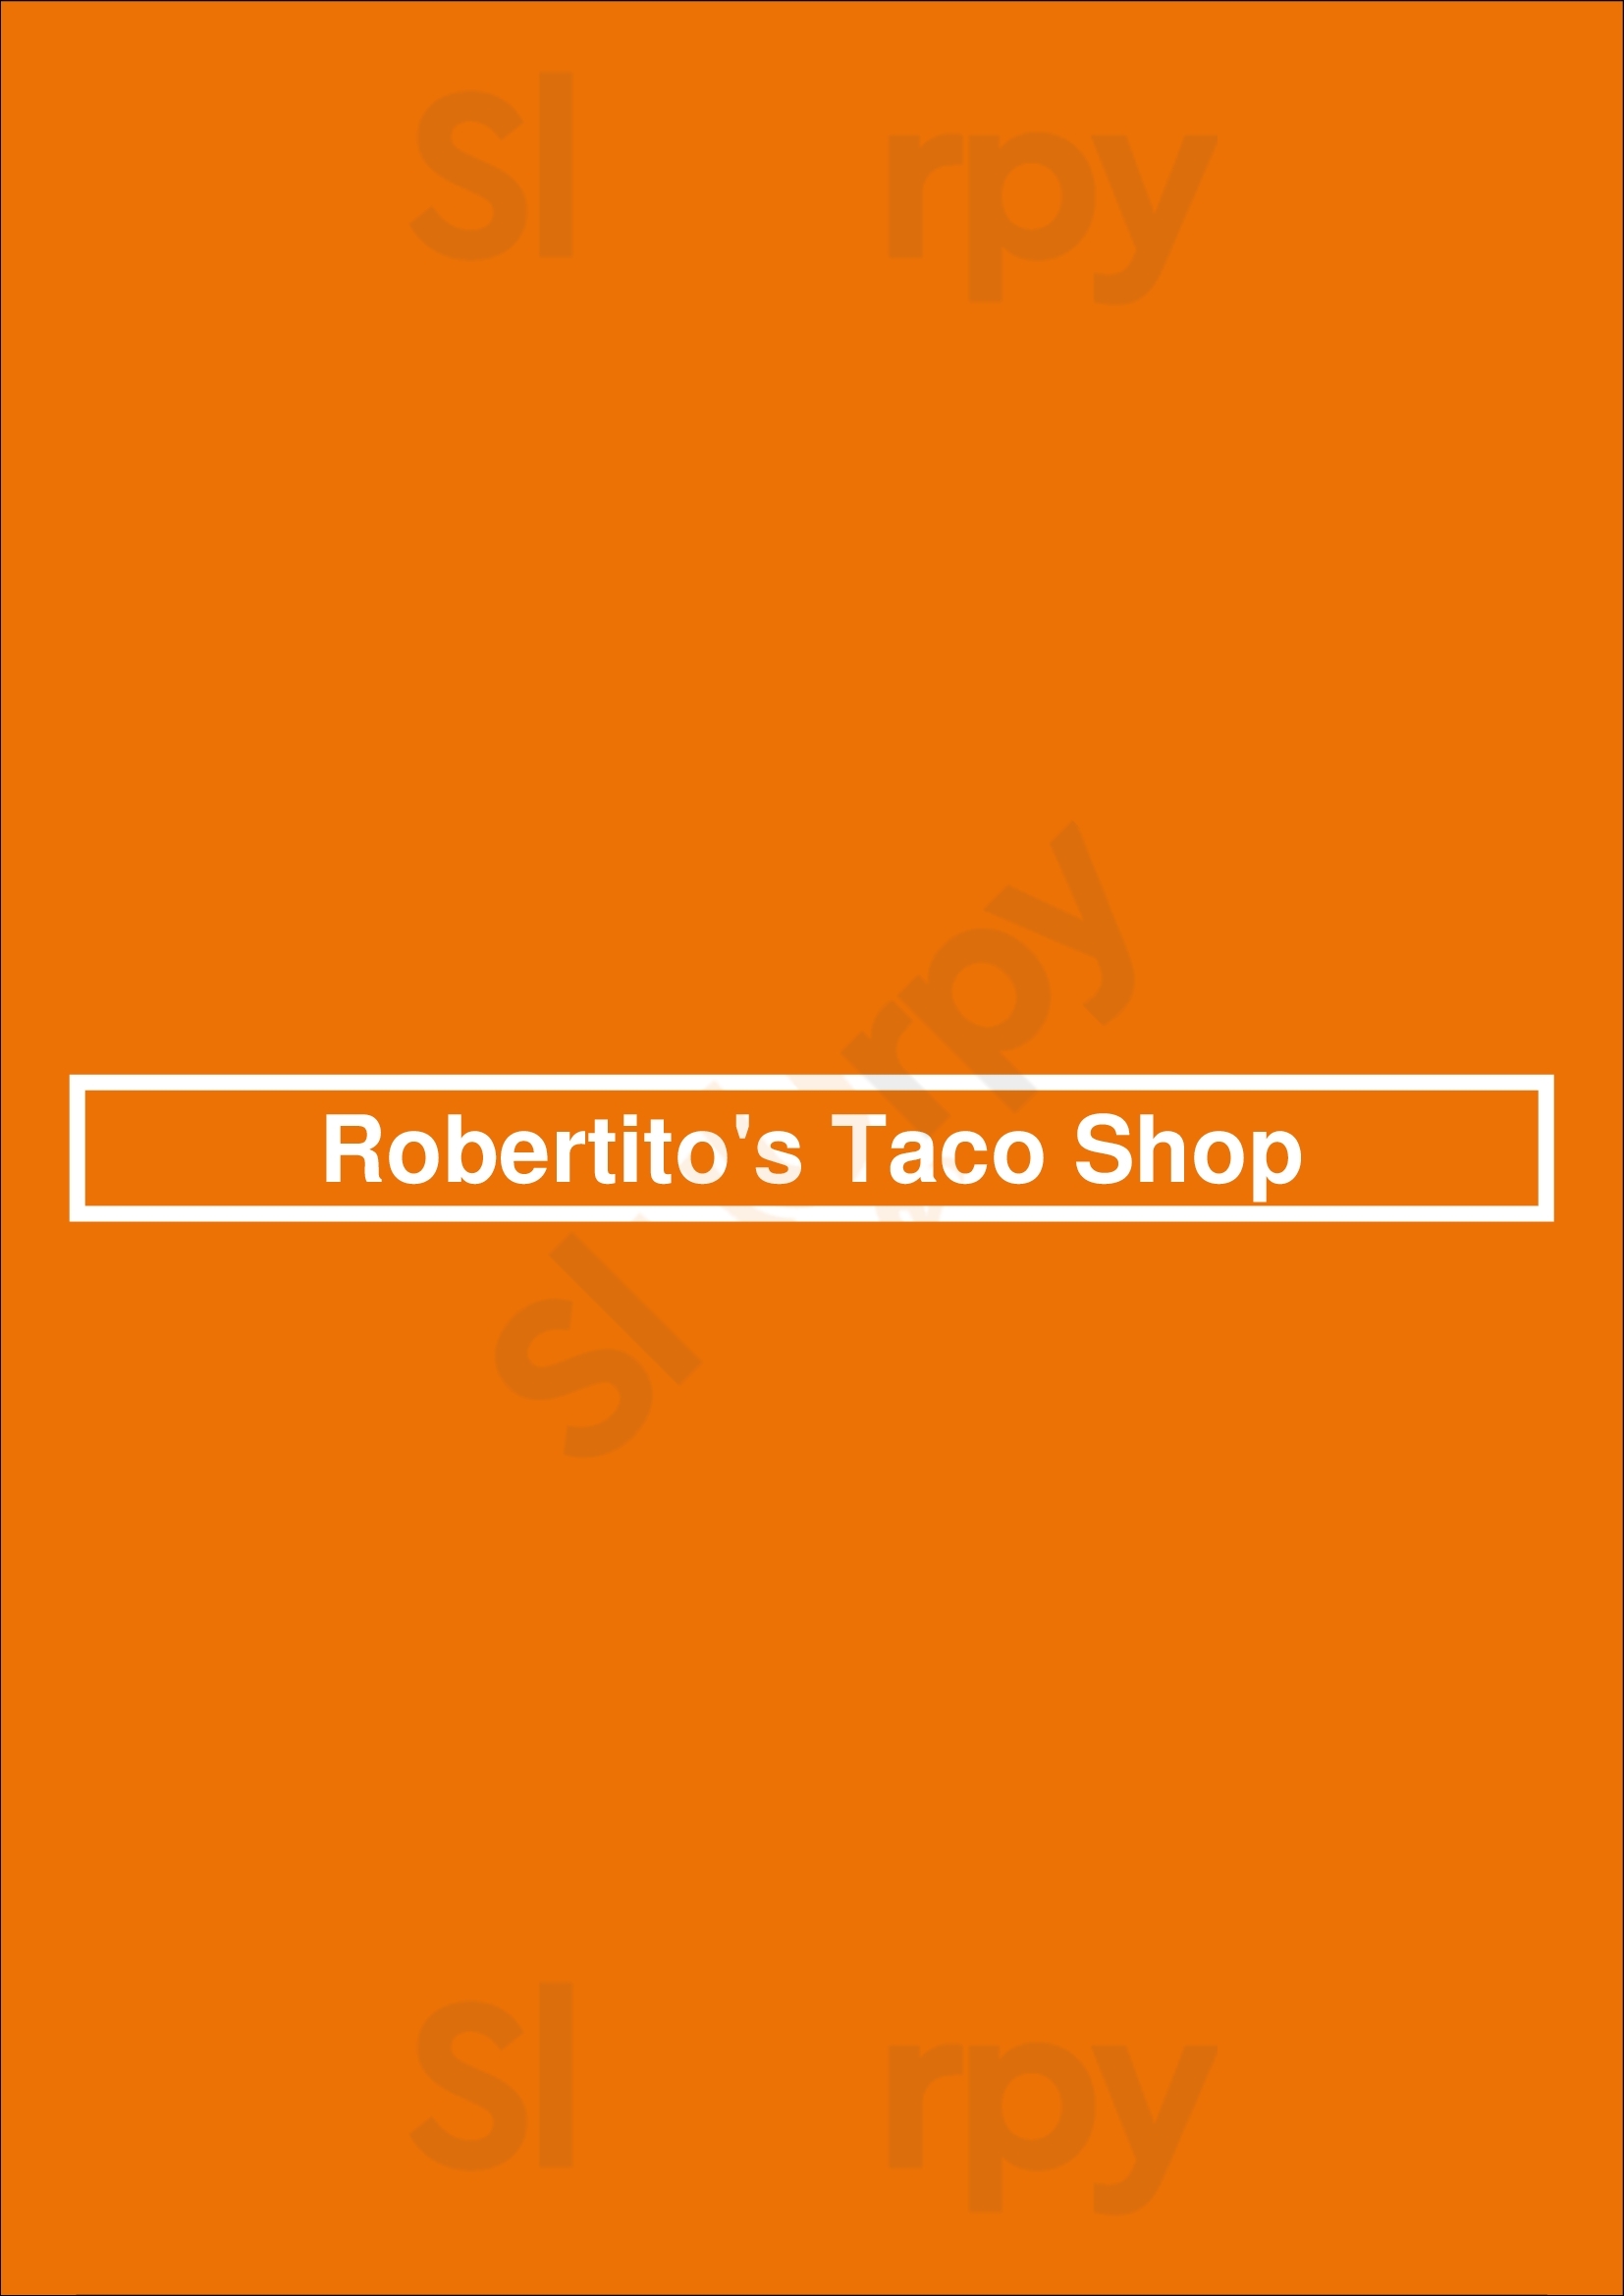 Robertito's Taco Shop Fresno Menu - 1